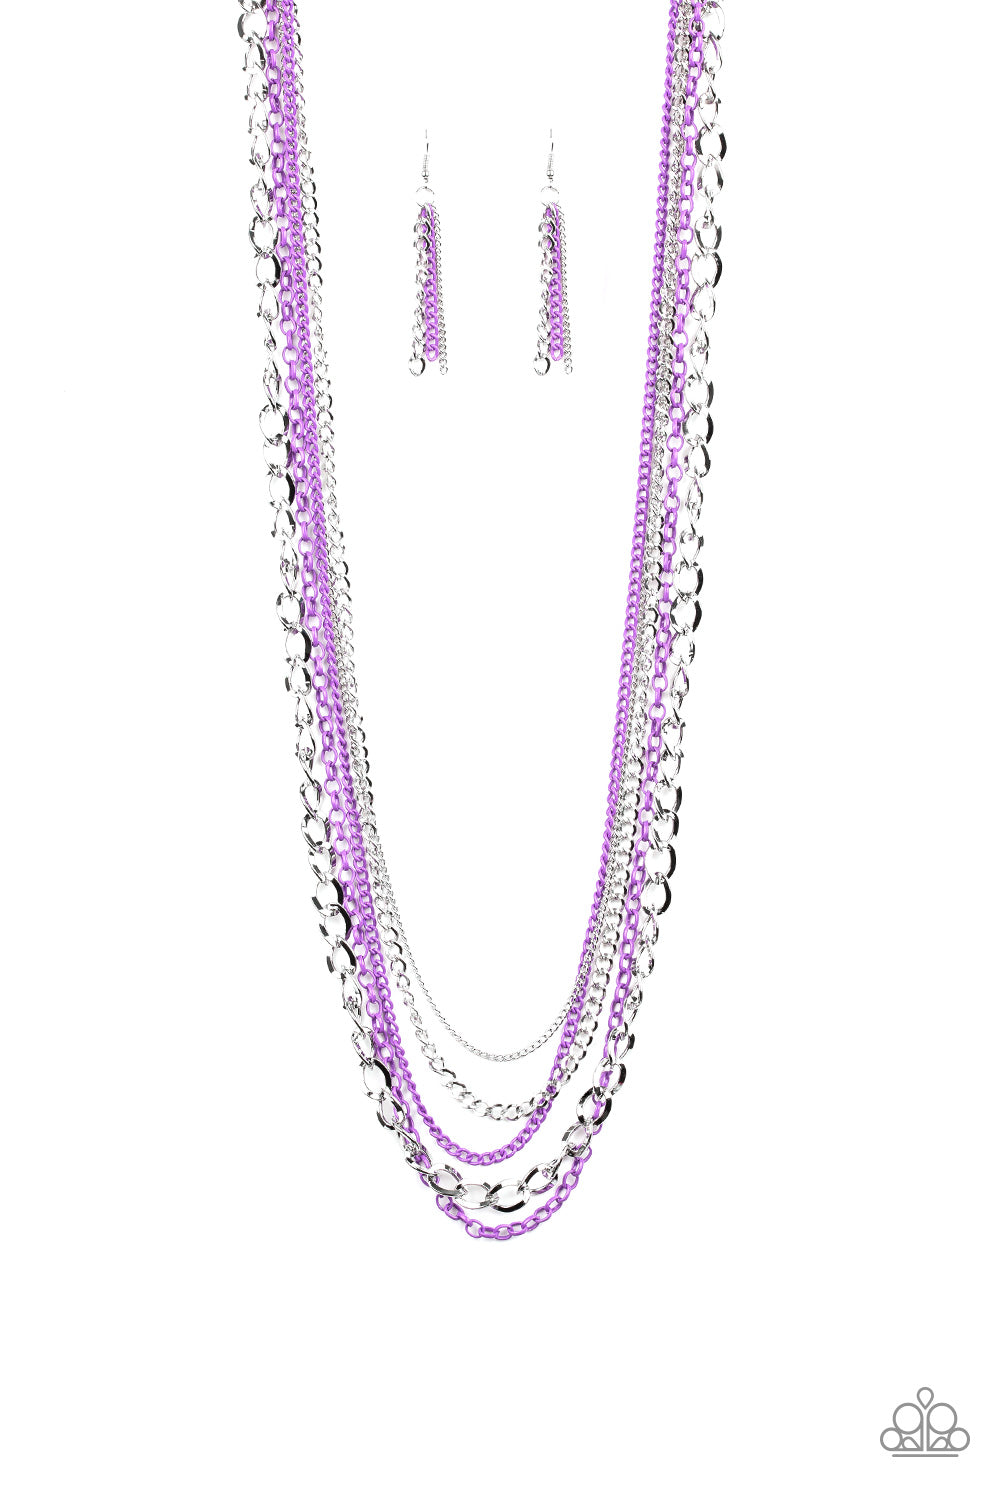 Industrial Vibrance - Purple necklace